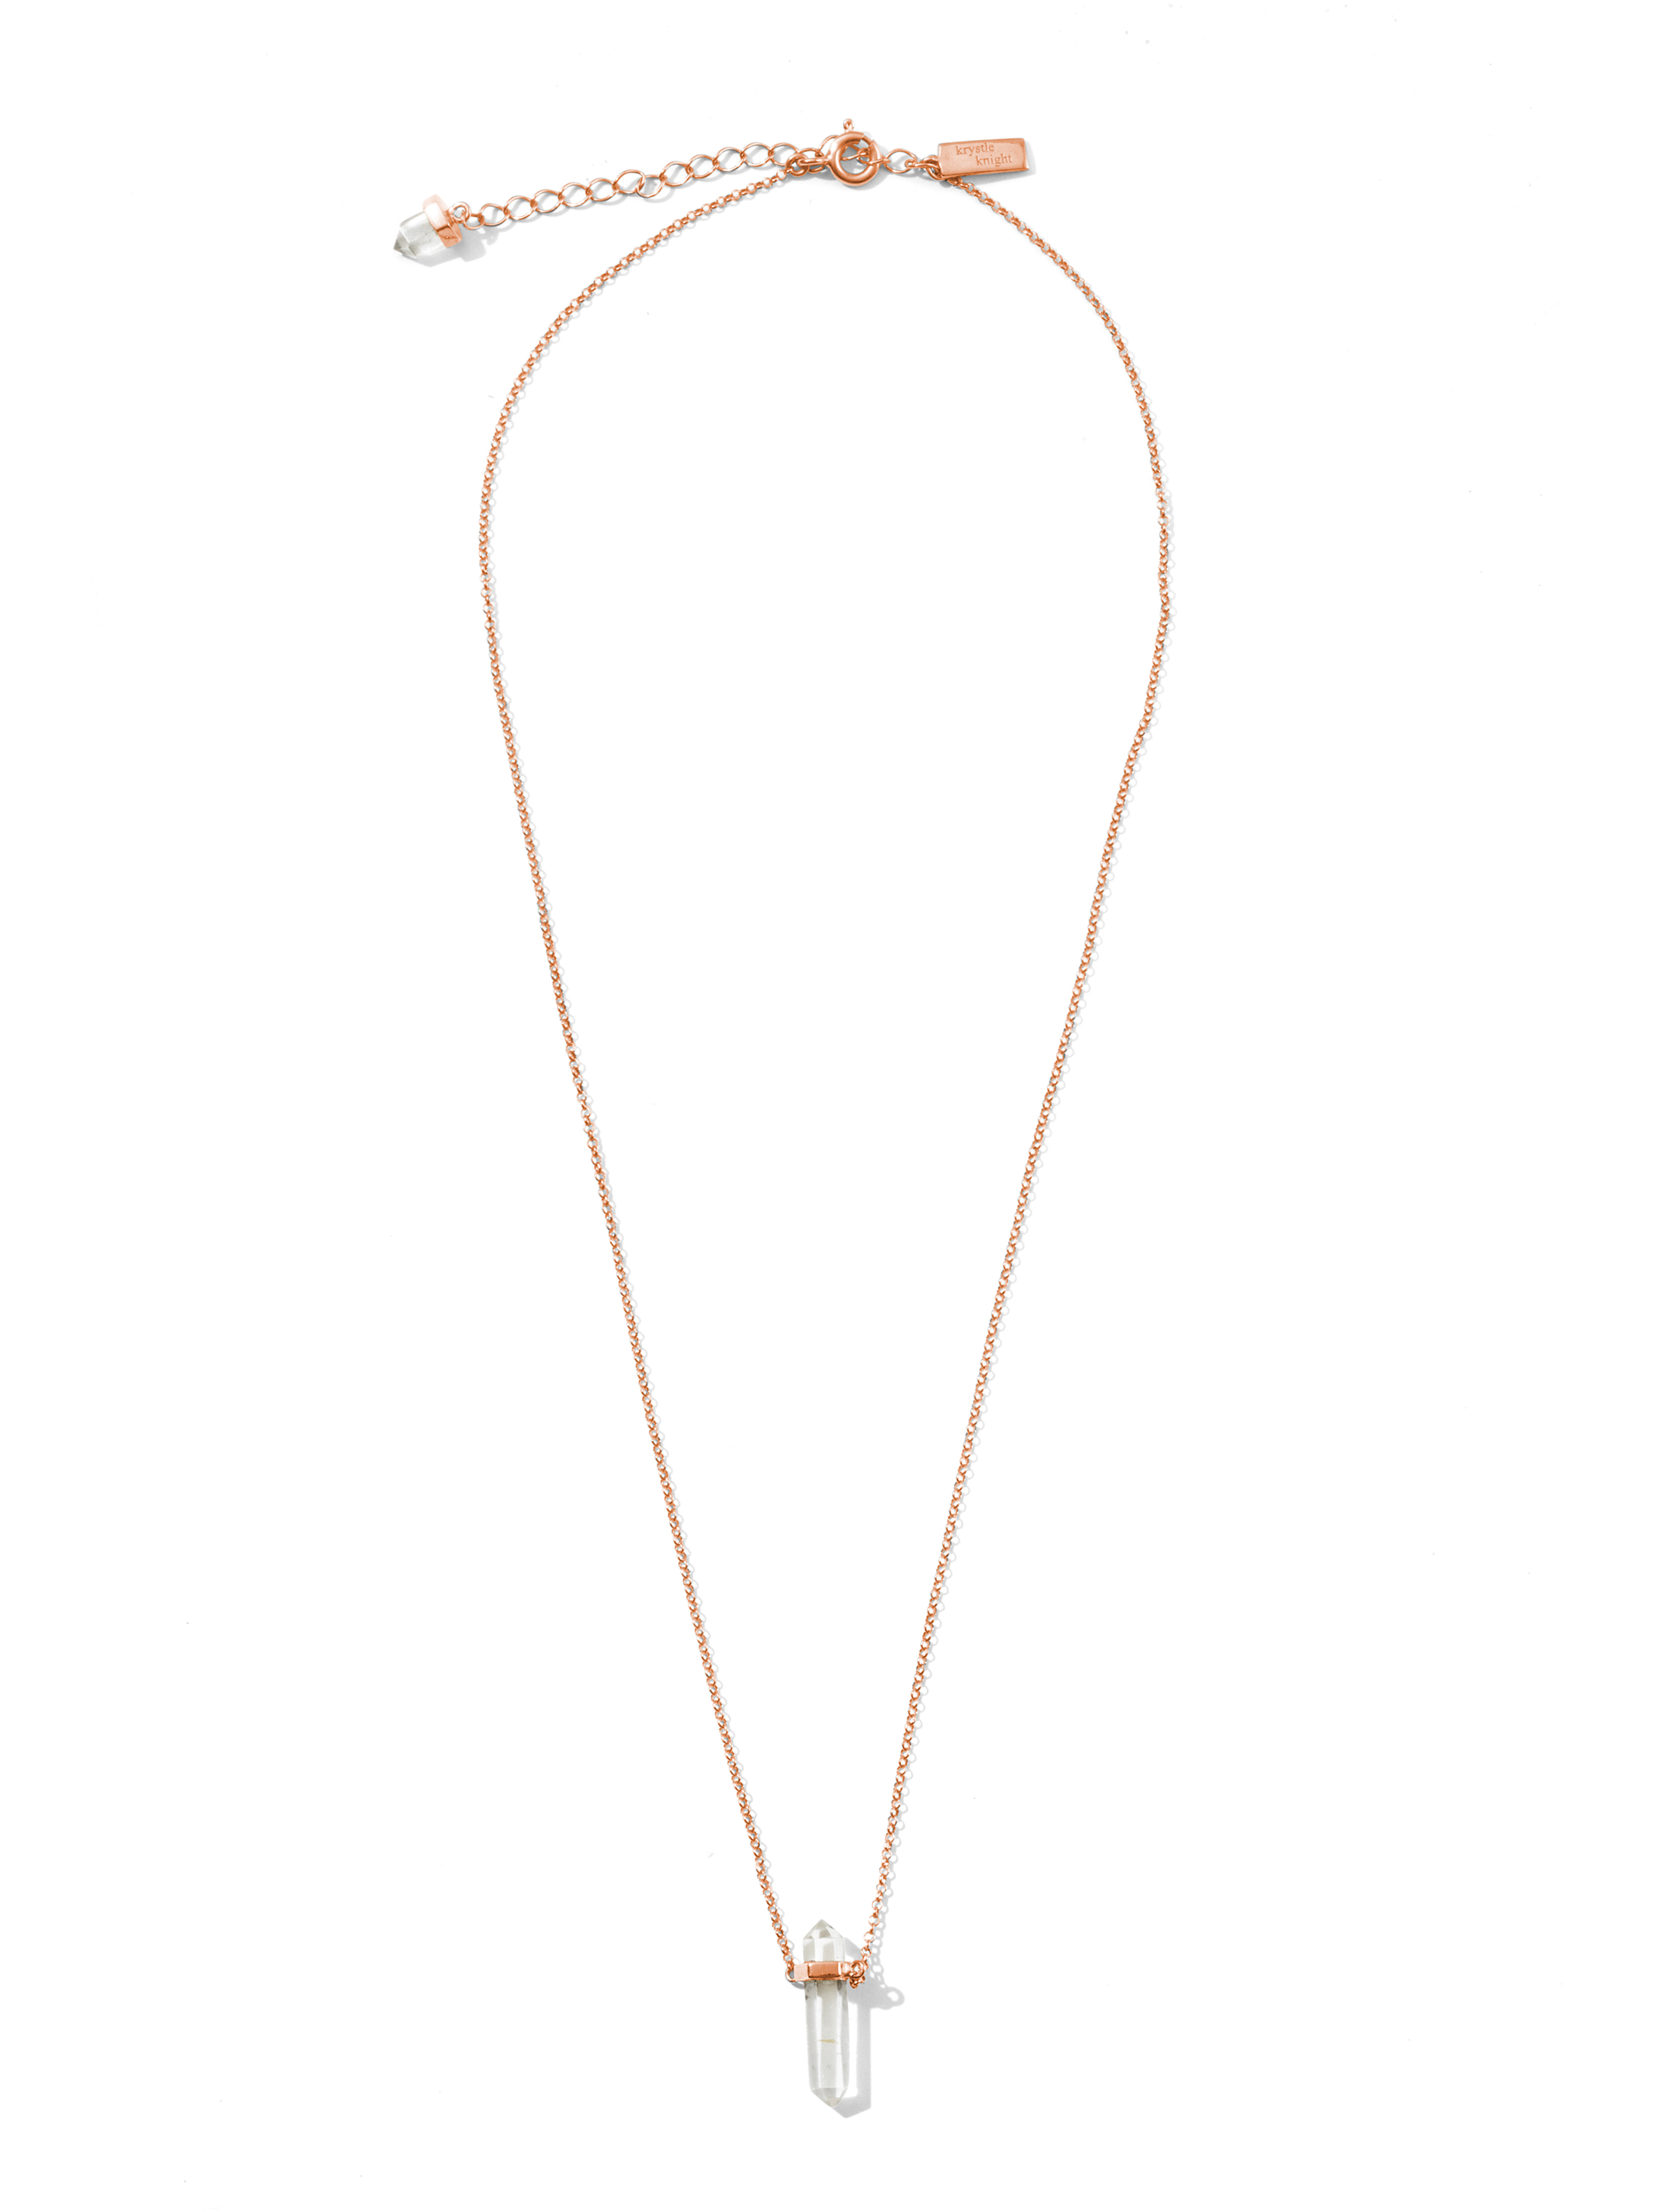 lunar quartz necklace | clear quartz